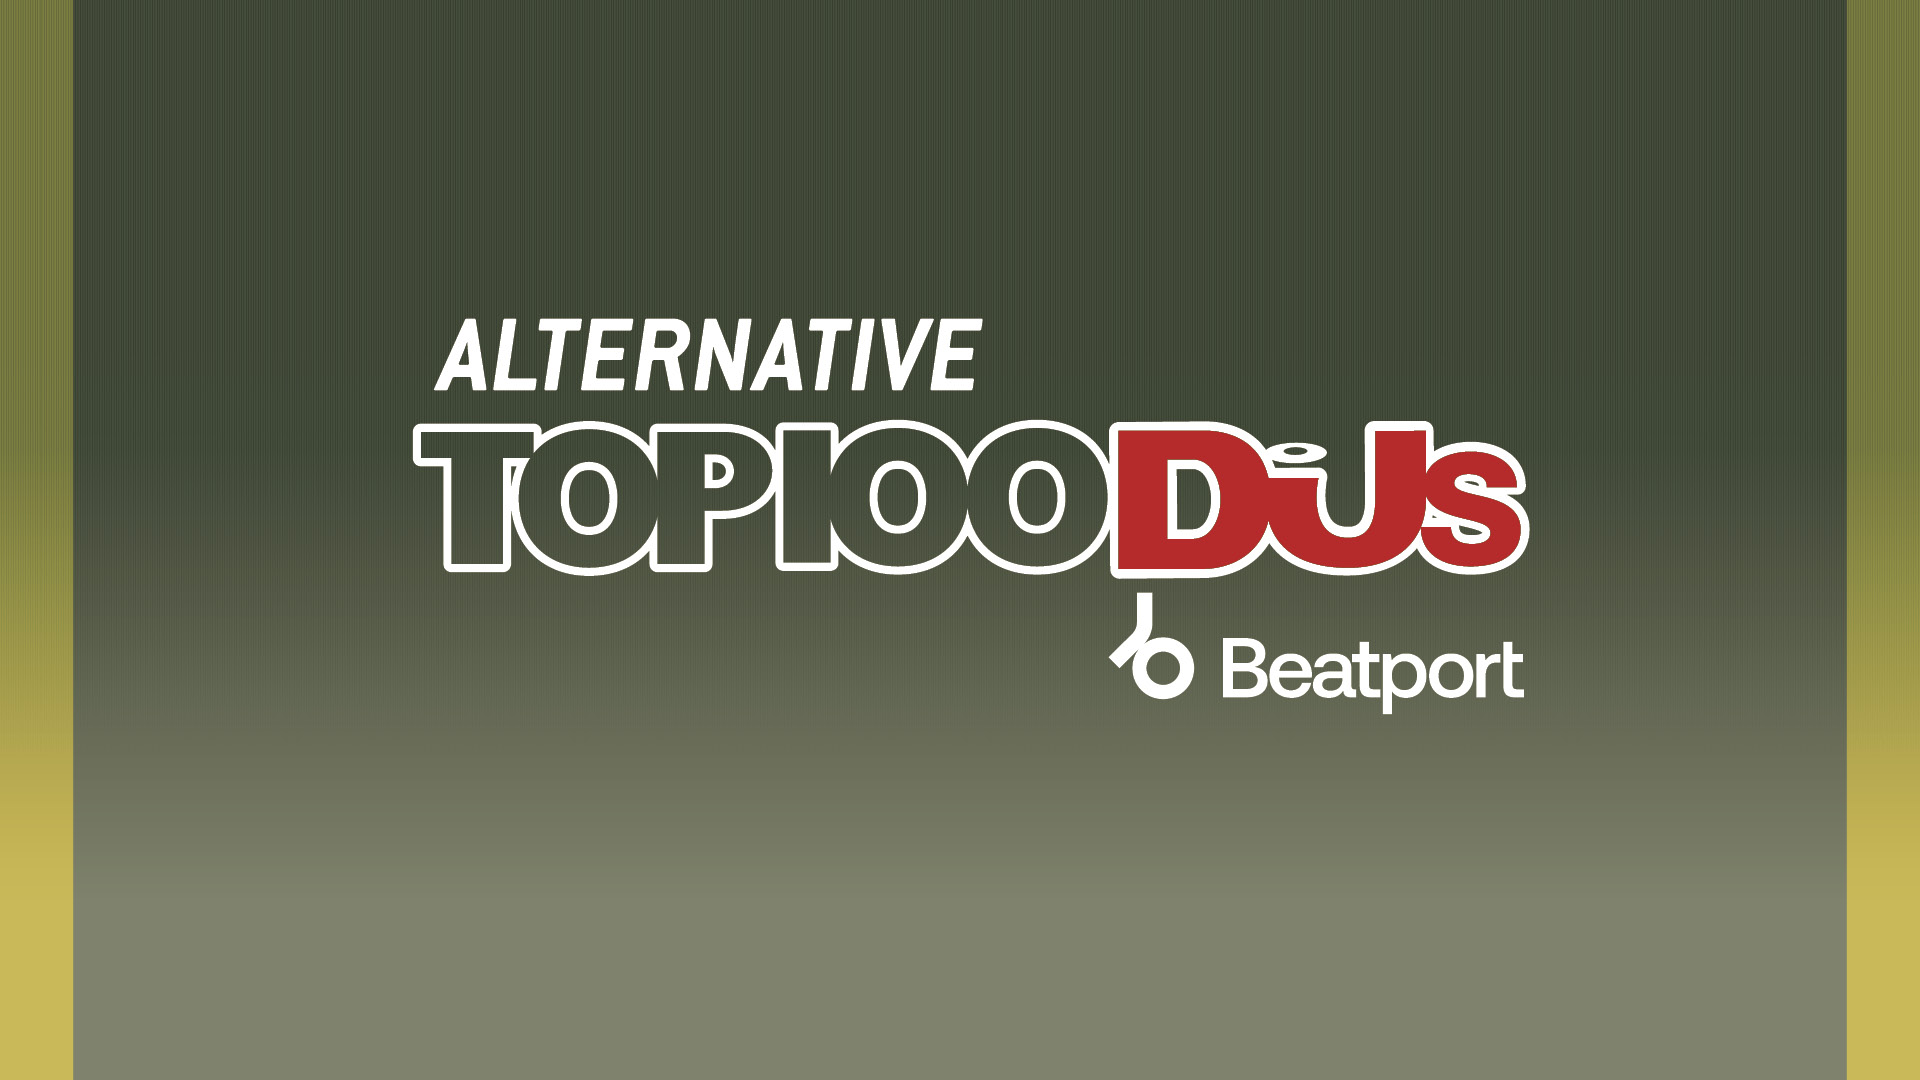 Top 100 DJs powered by Beatport | DJMag.com